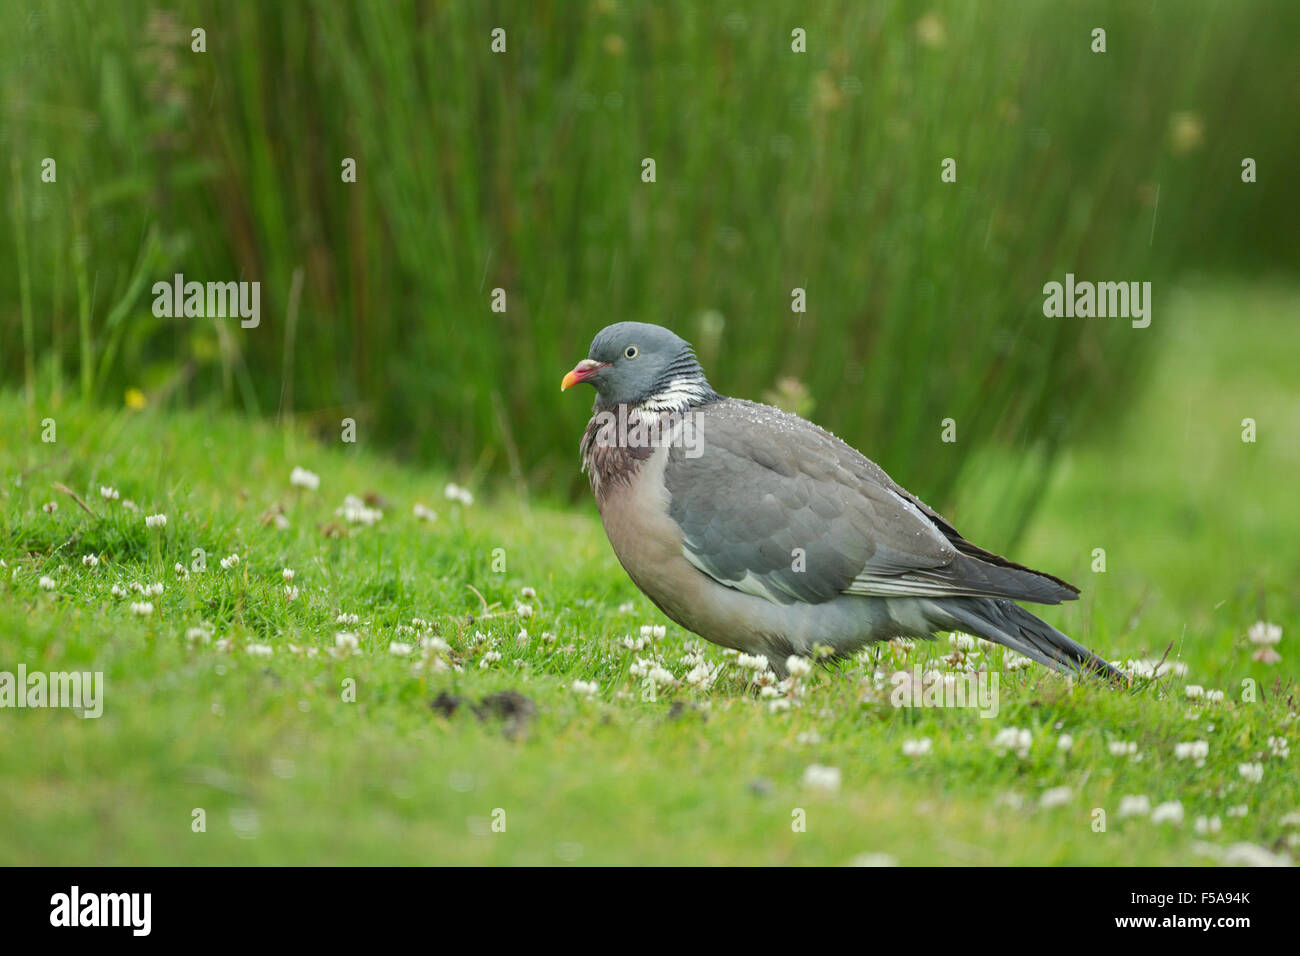 Woodpigeon, latin name Columba palunbus, standing on grass in rain Stock Photo